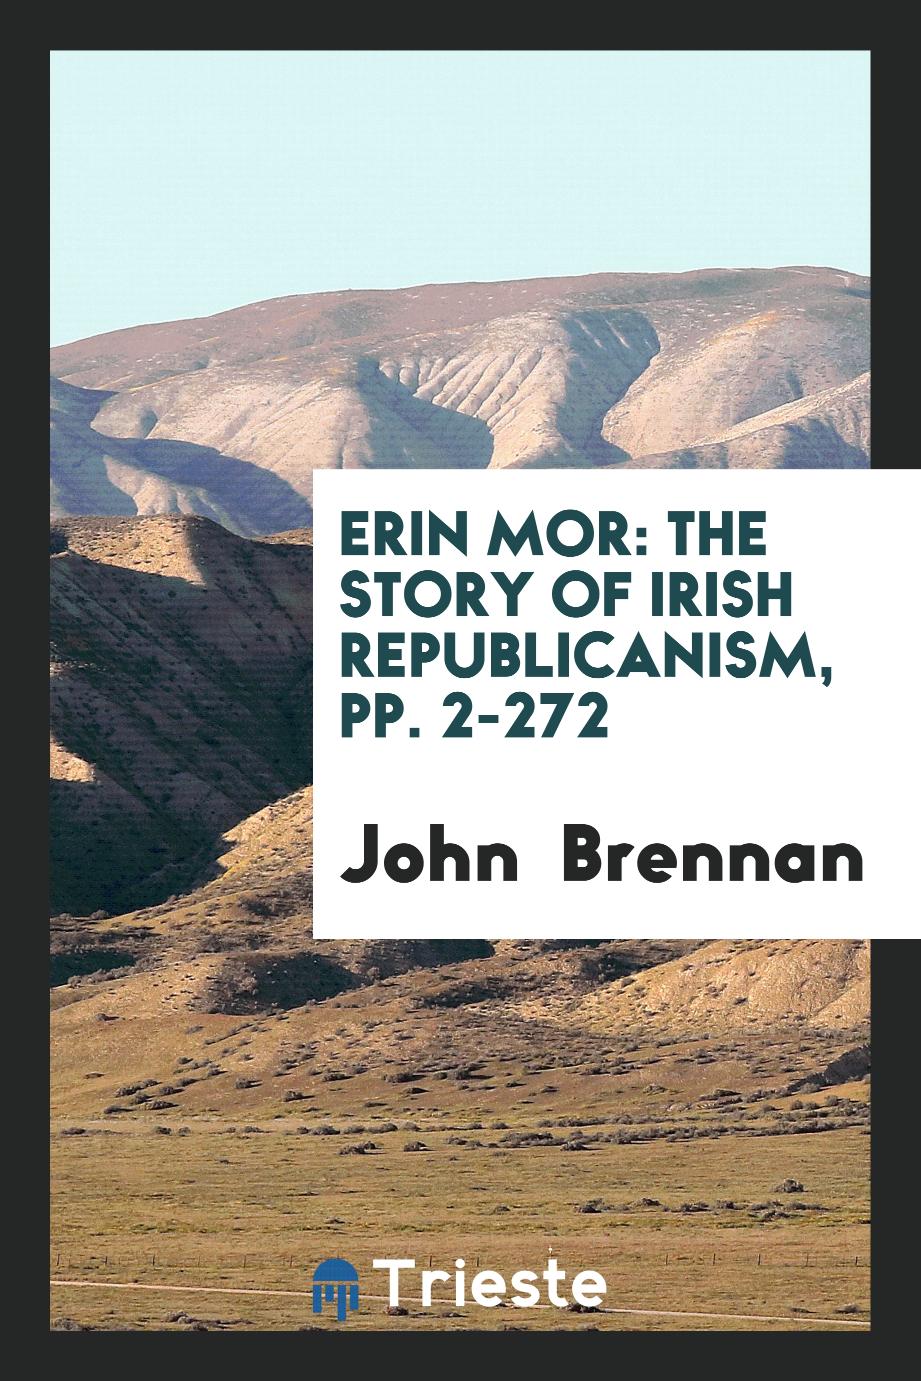 Erin Mor: The Story of Irish Republicanism, pp. 2-272